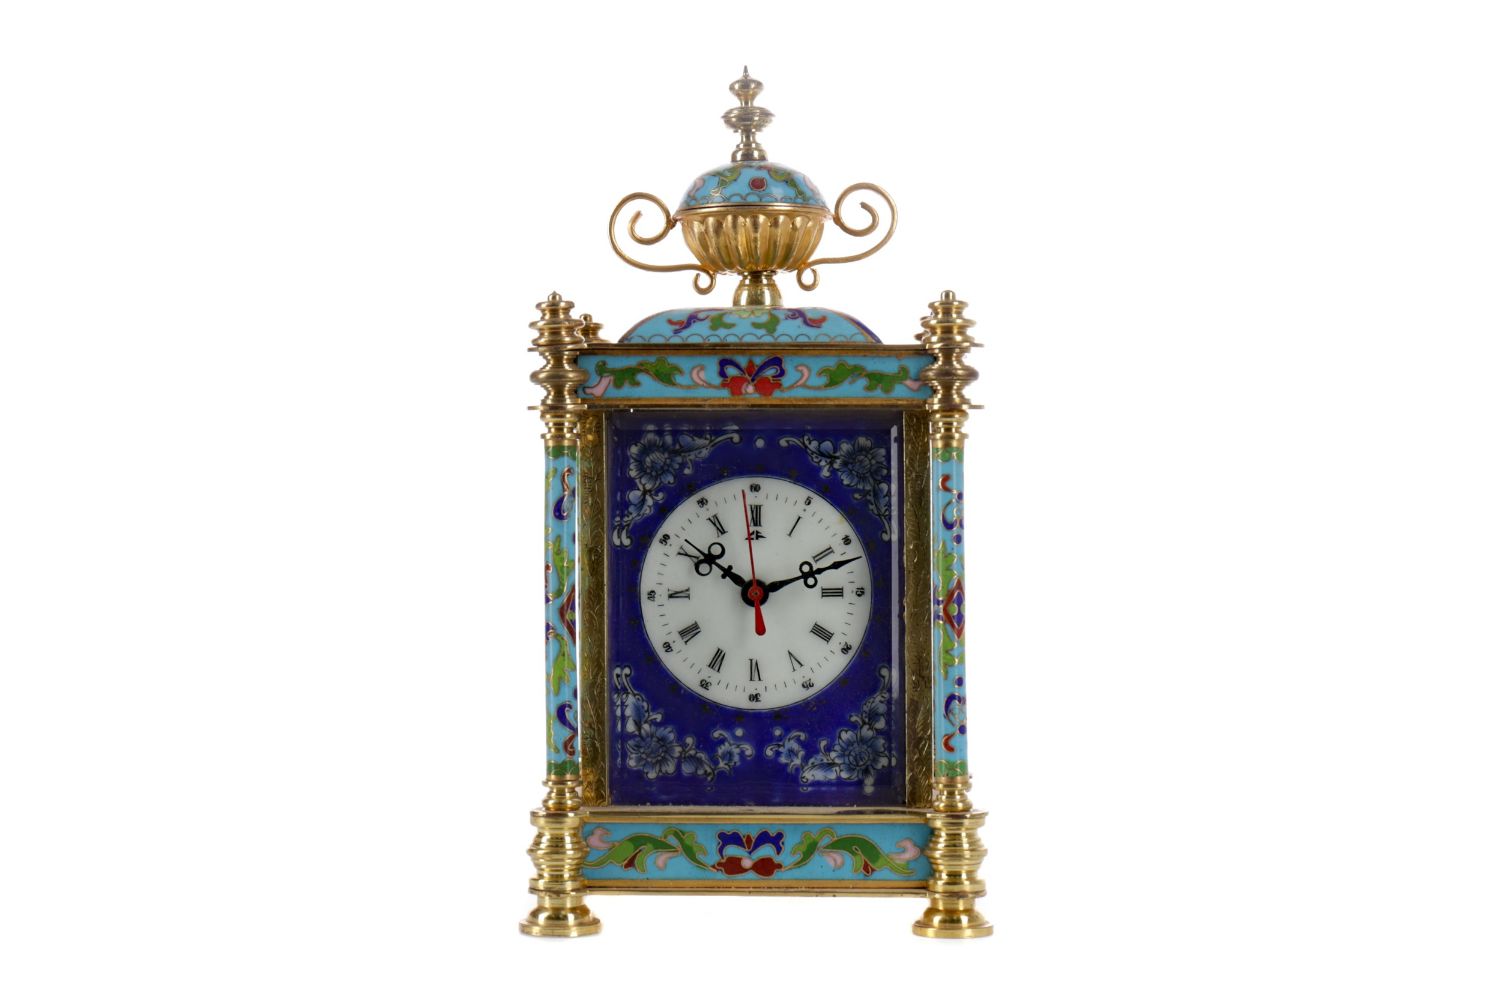 The Clocks, Scientific & Musical Instruments Auction